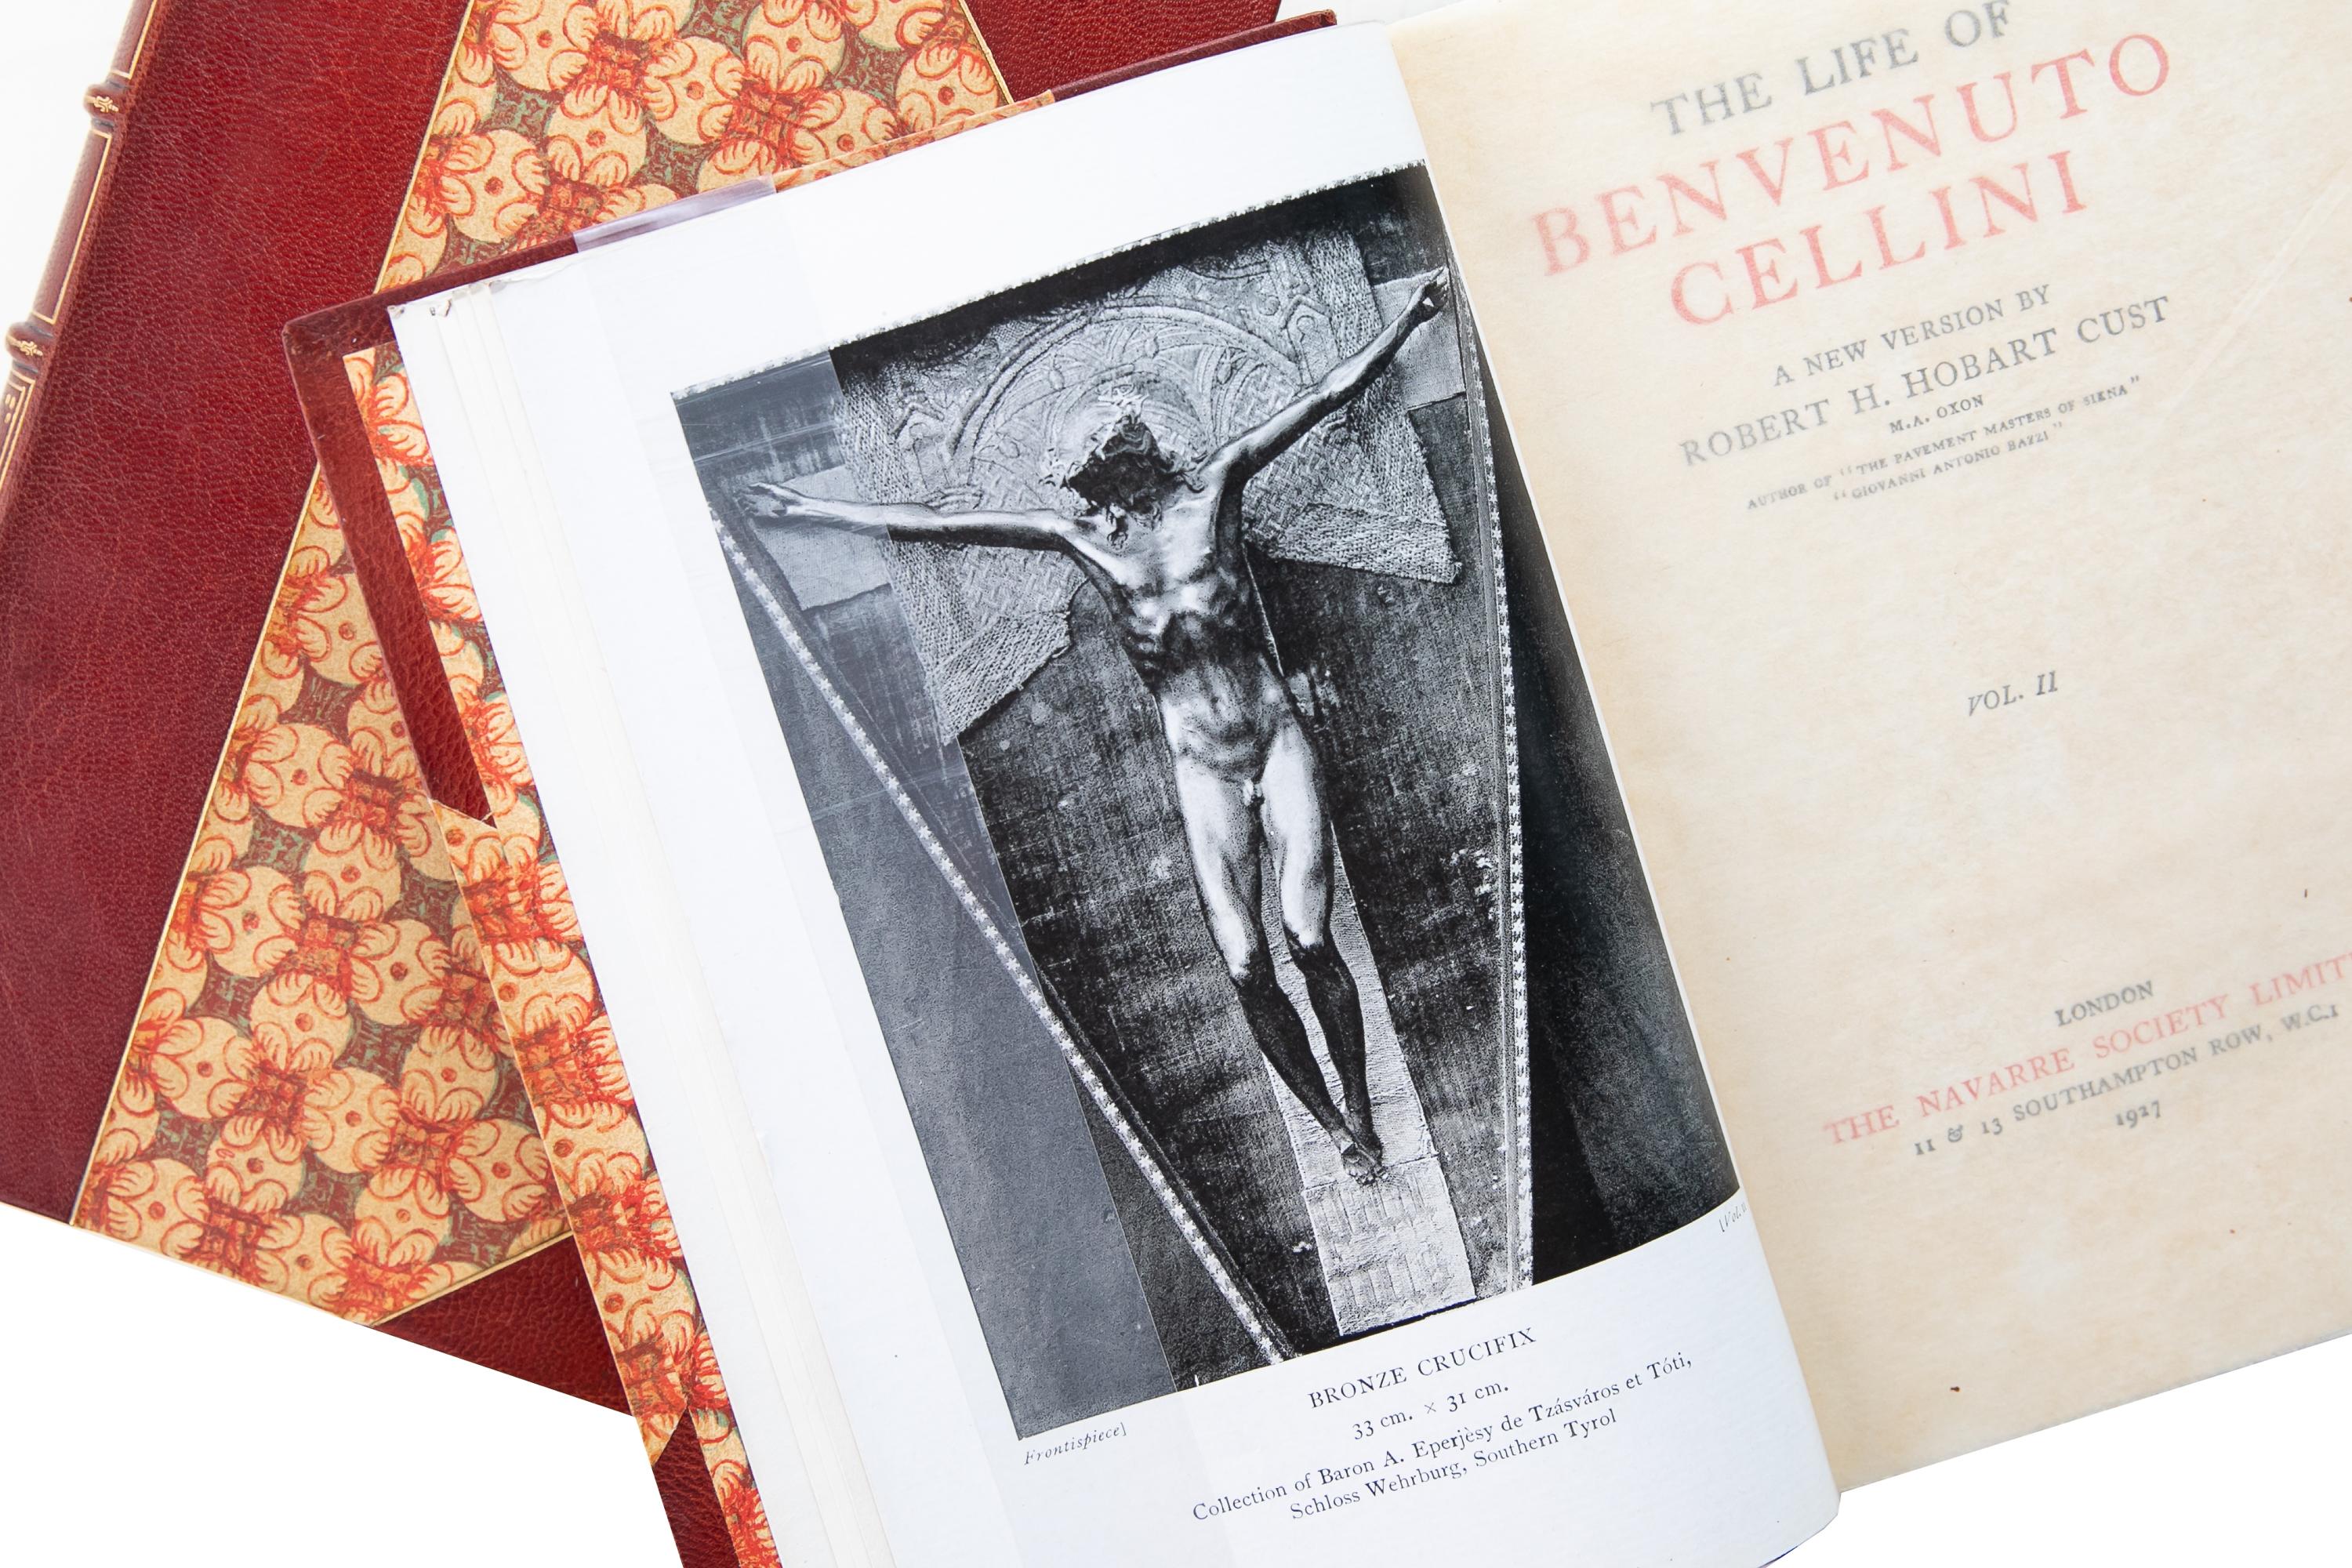 20th Century 2 Volumes. Robert H. Hobart Cust, The Life of Benvenuto Cellini.